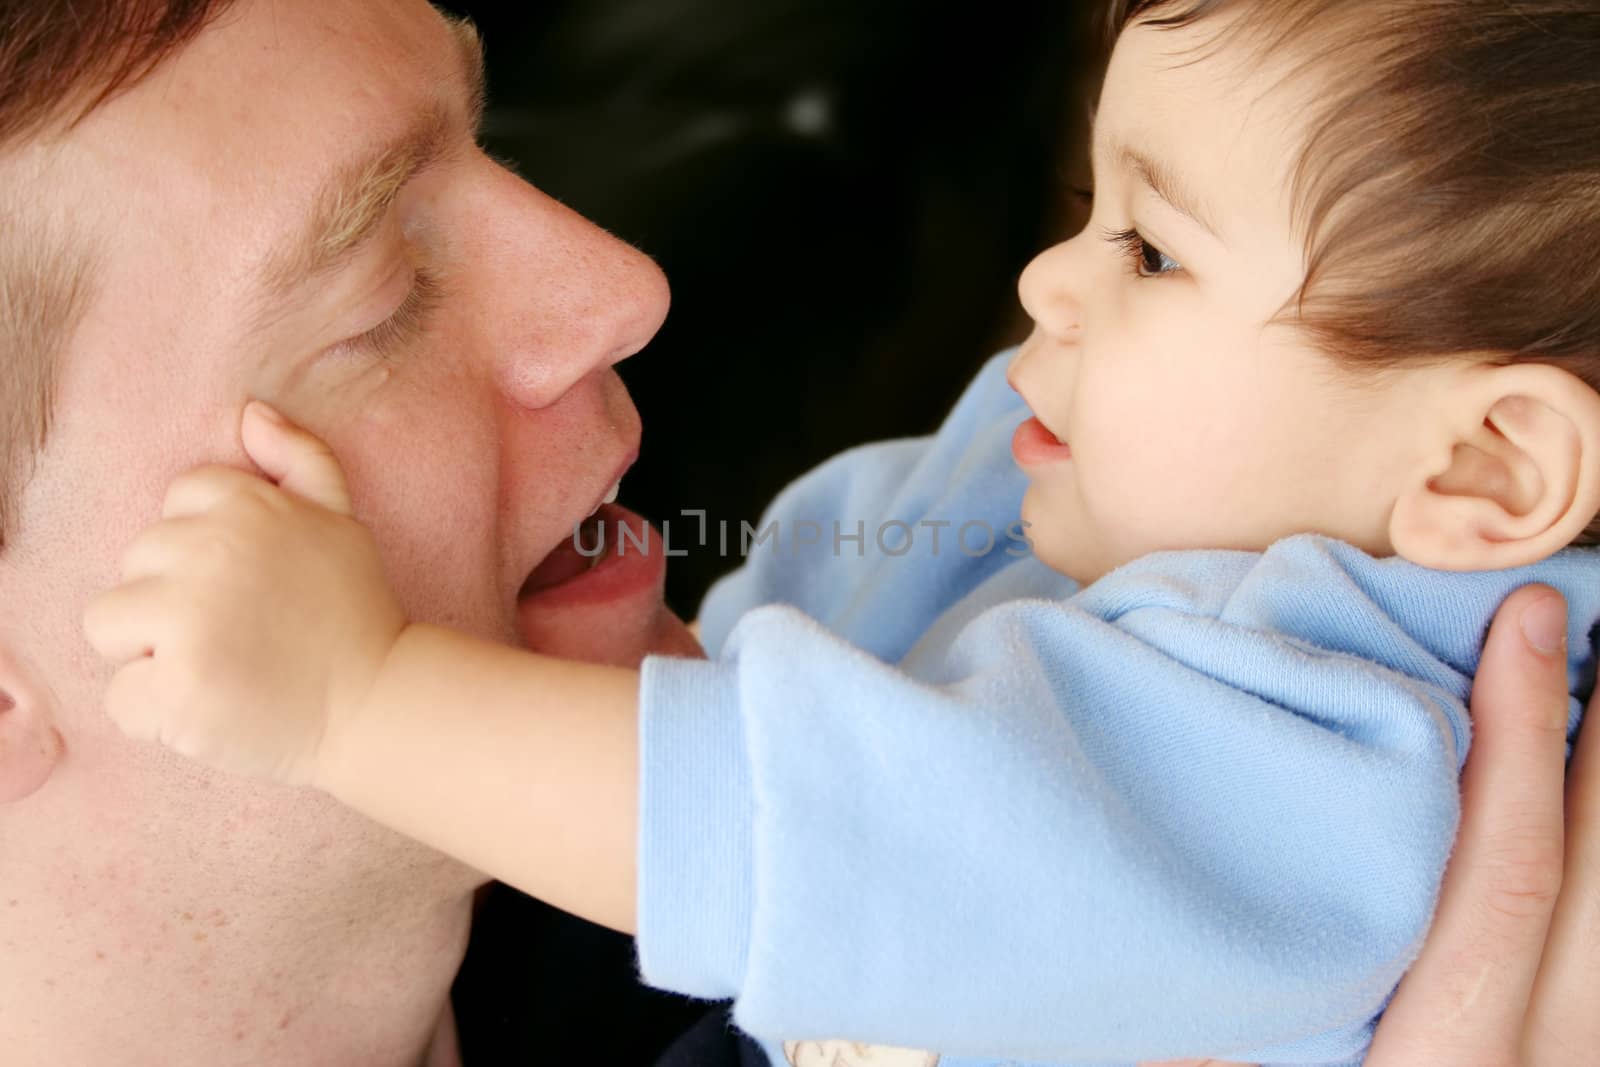 Baby tenderly touching dad's face by jarenwicklund